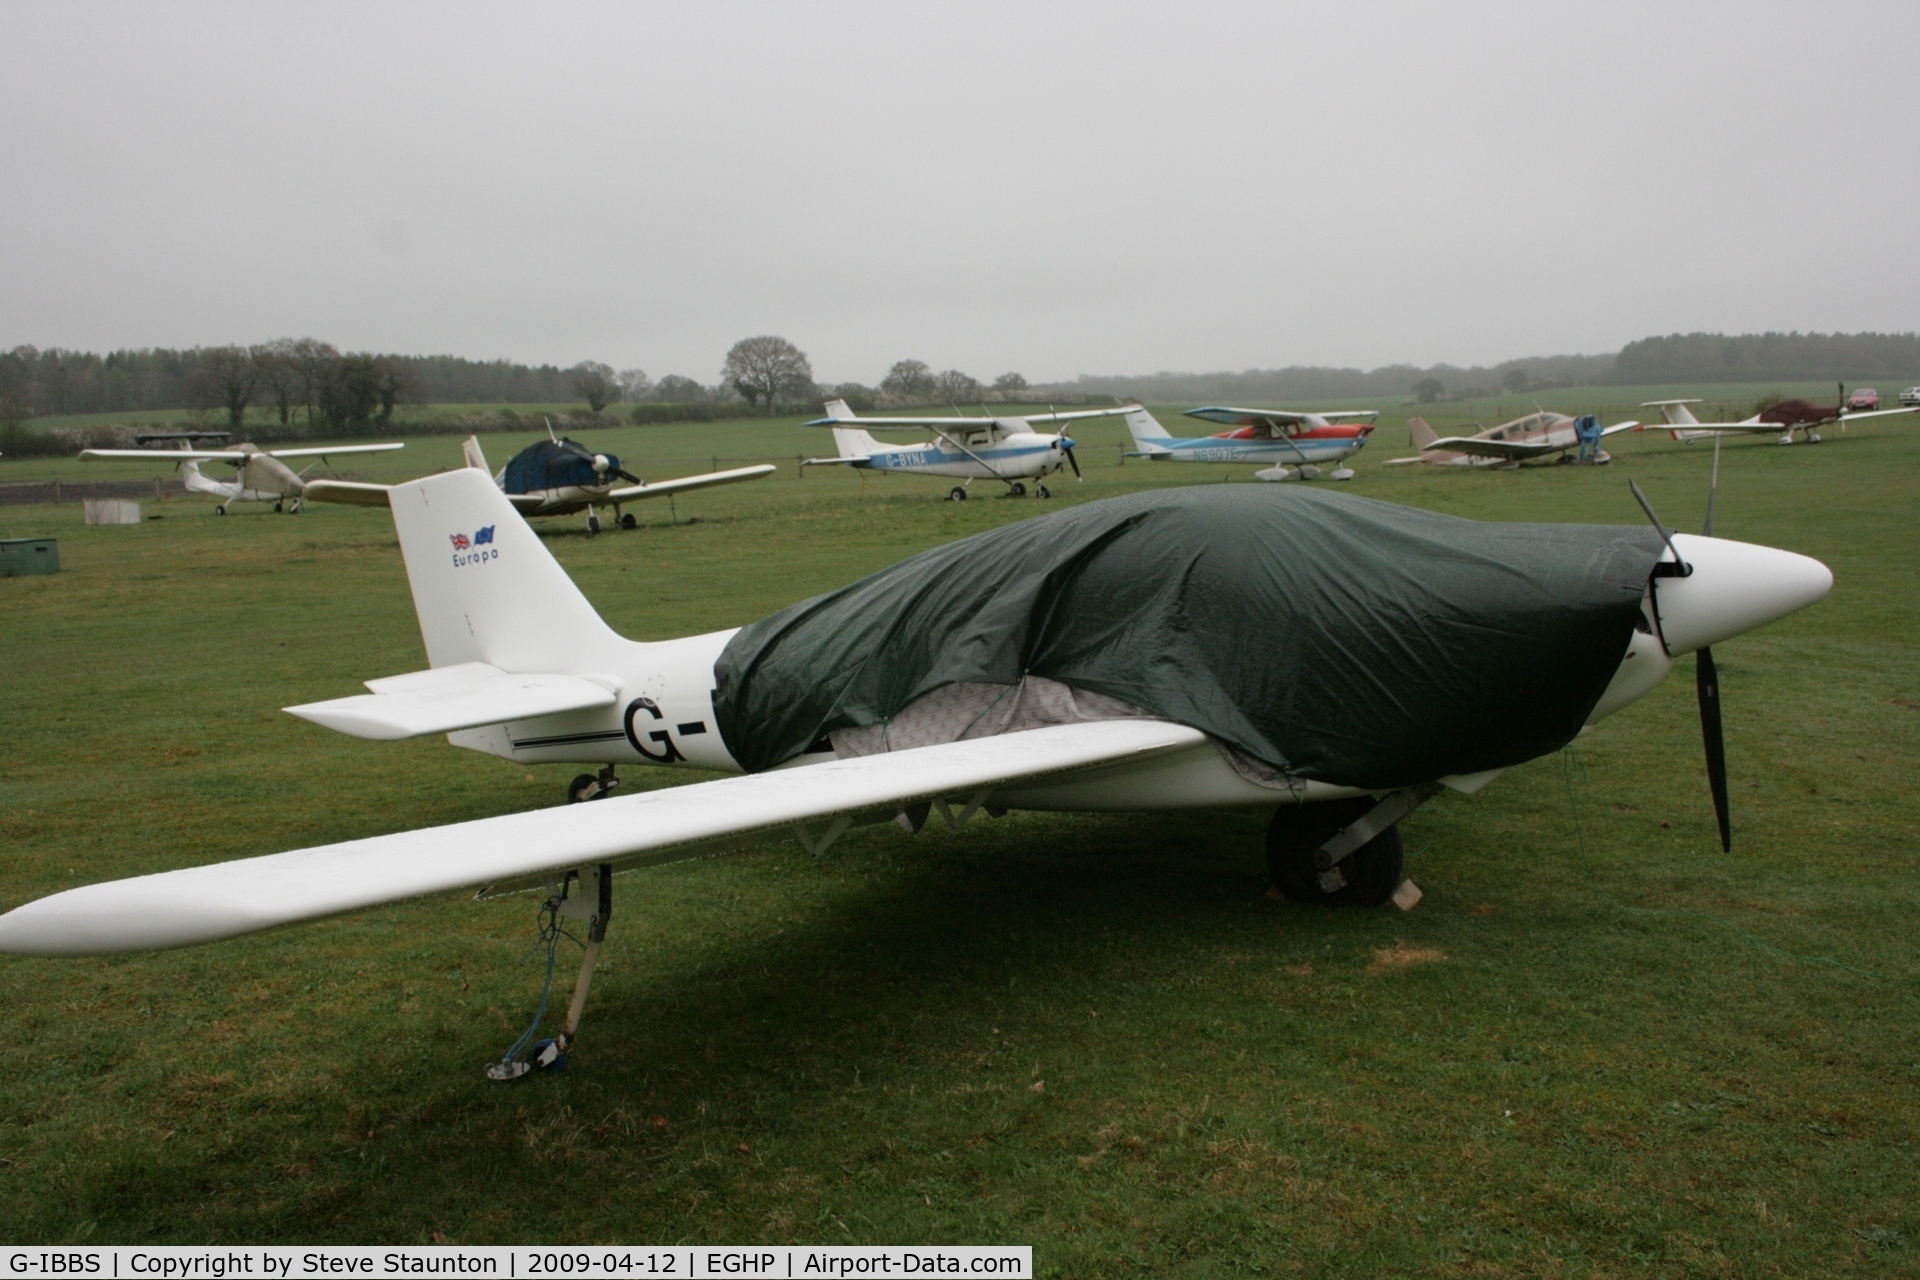 G-IBBS, 1997 Europa Monowheel C/N PFA 247-12745, Taken at Popham Airfield, England on a gloomy April Sunday (12/04/09)